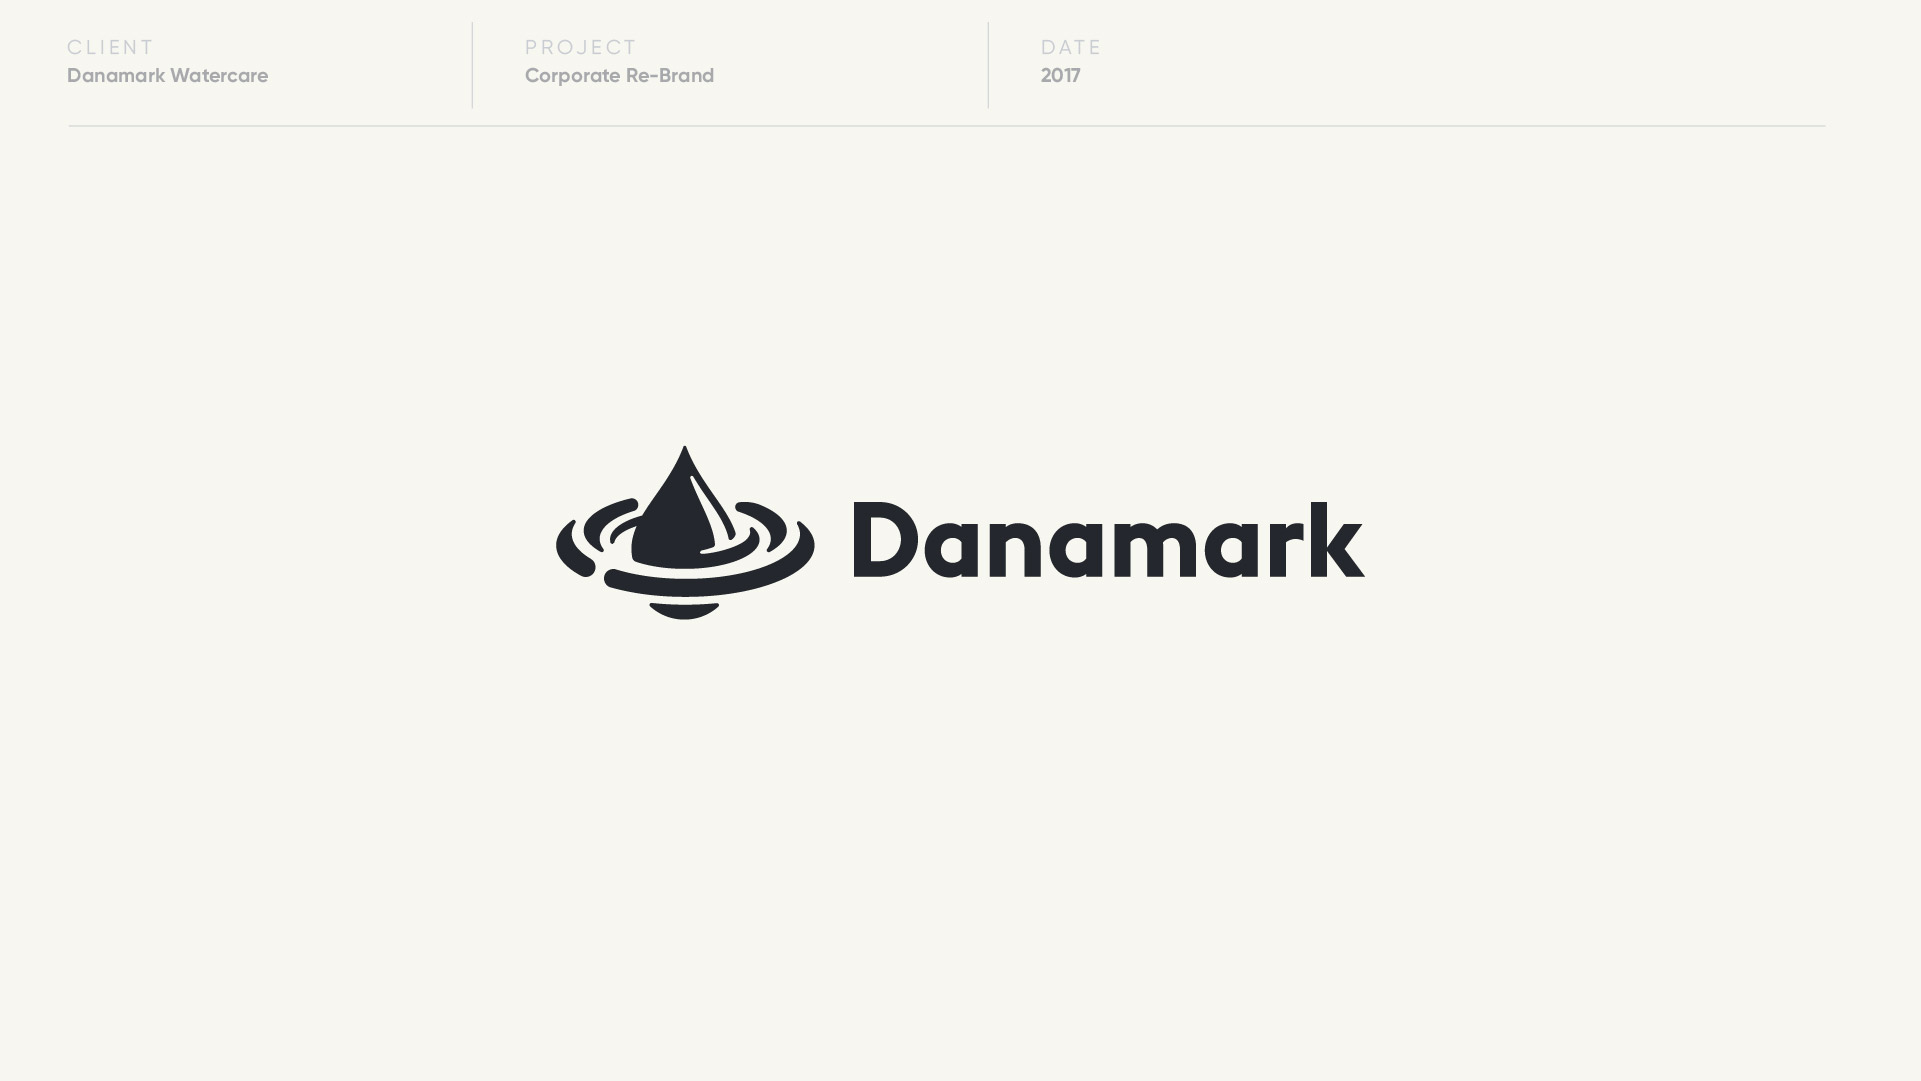 danamark watercare logo design by anthony mika